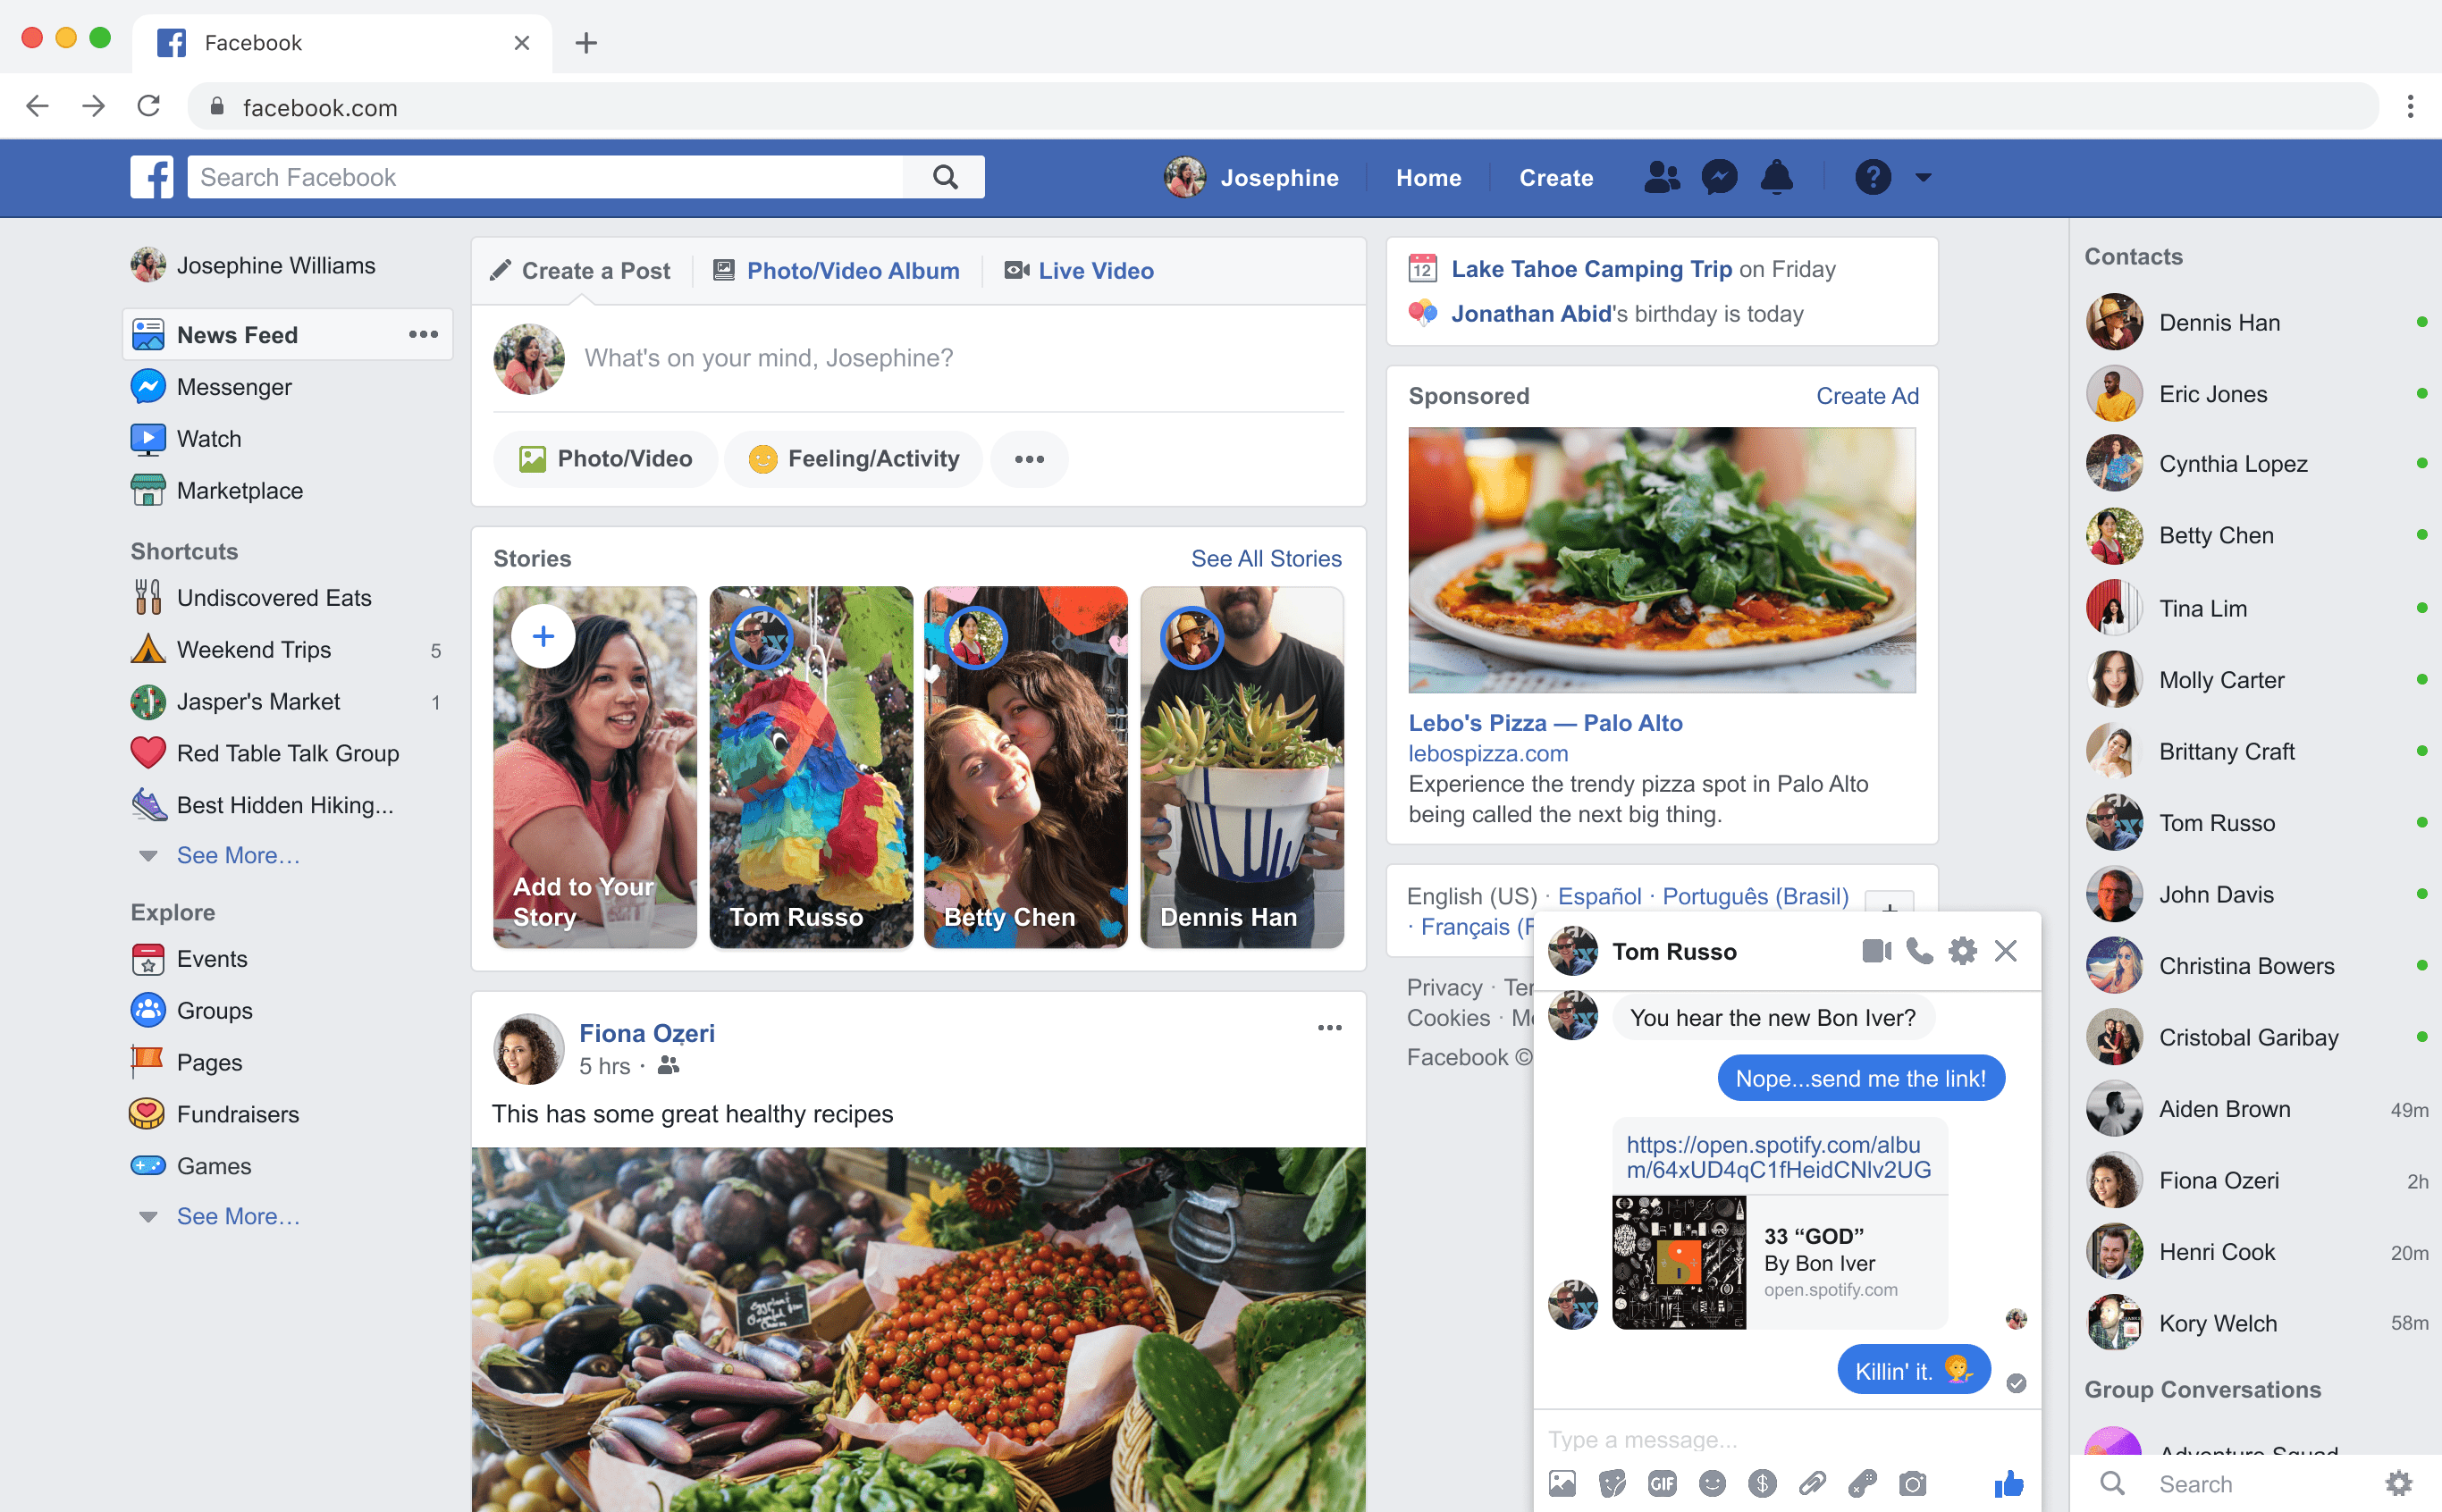 Facebook.com (Homepage)